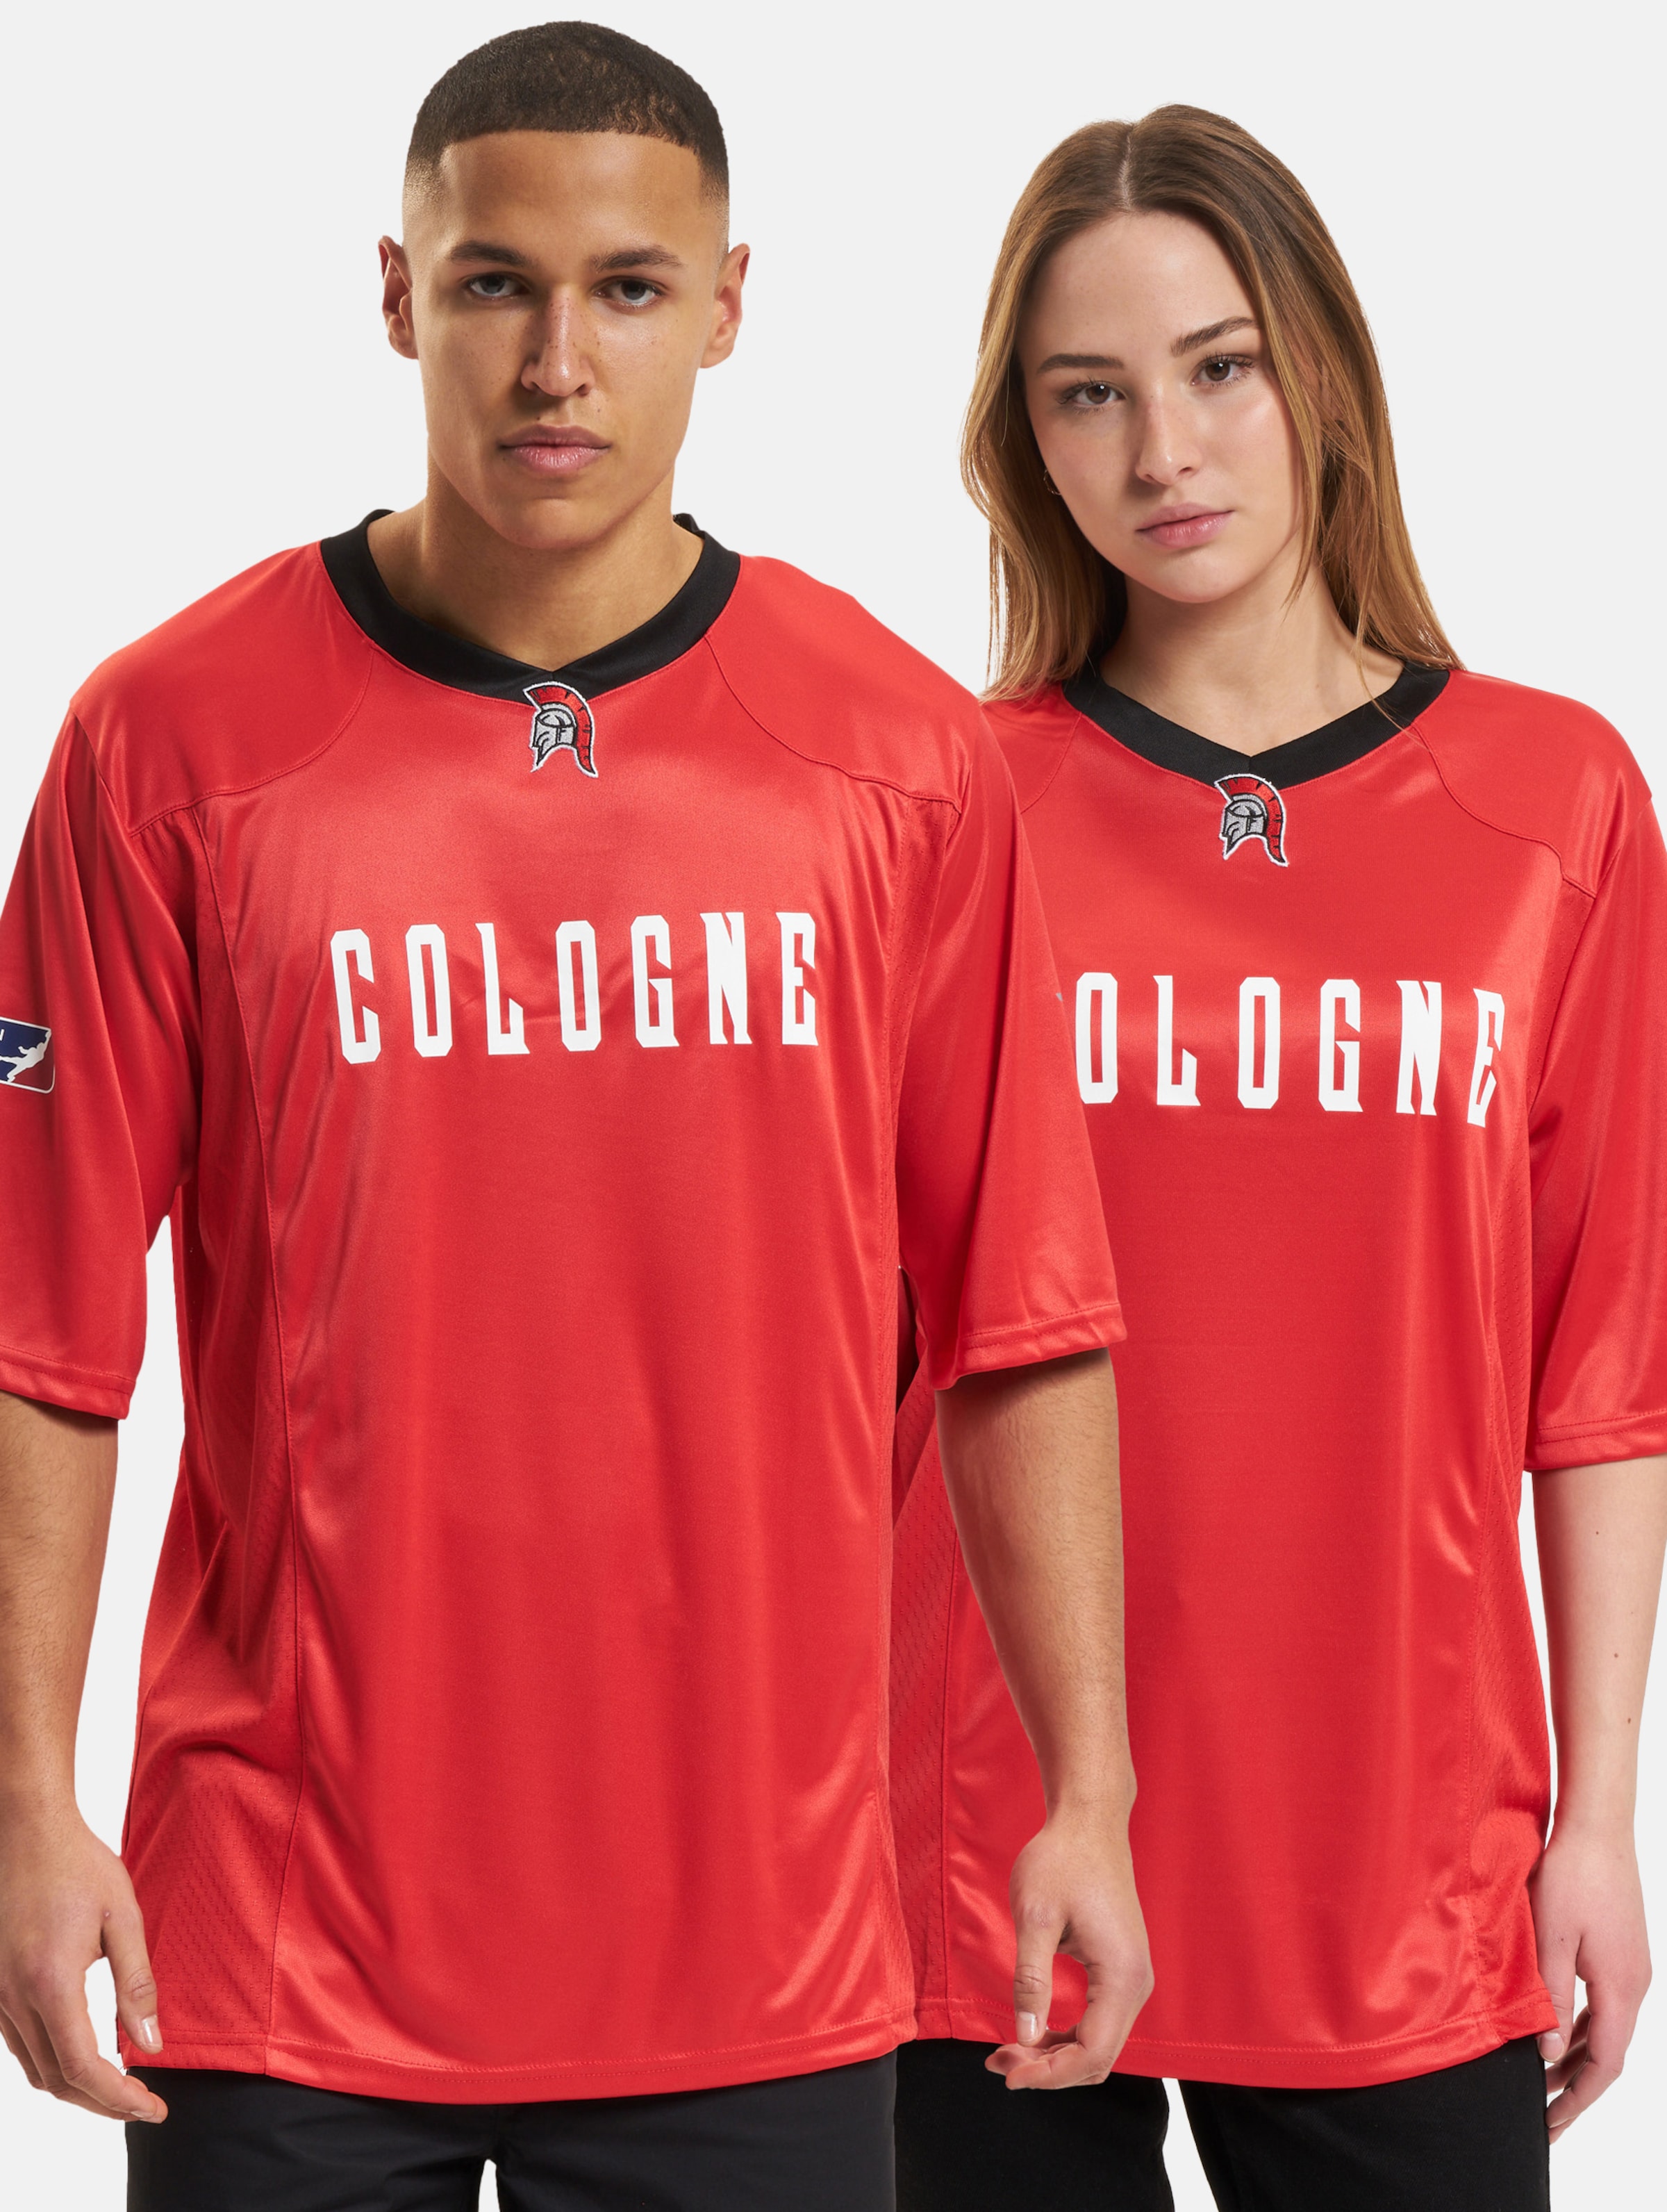 European League Of Football Cologne Centurions Authentic Game Jersey Frauen,Männer,Unisex op kleur rood, Maat S